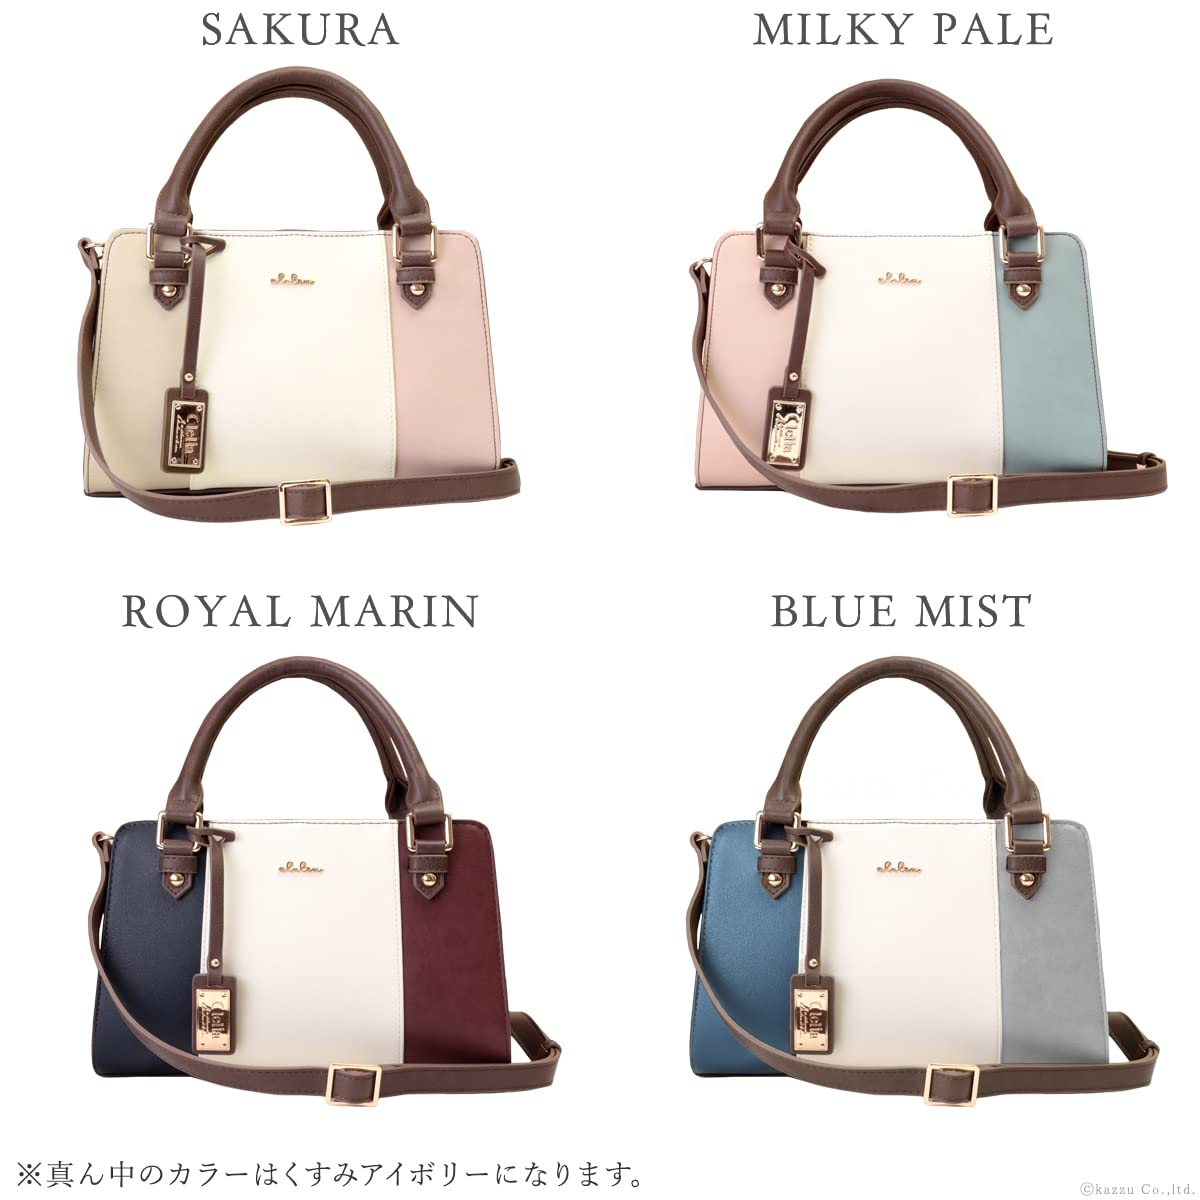 Cleria CL-22883 Riberte Series Women's Shoulder Bag, Coin Pouch, Tricolor 2-Way Handbag